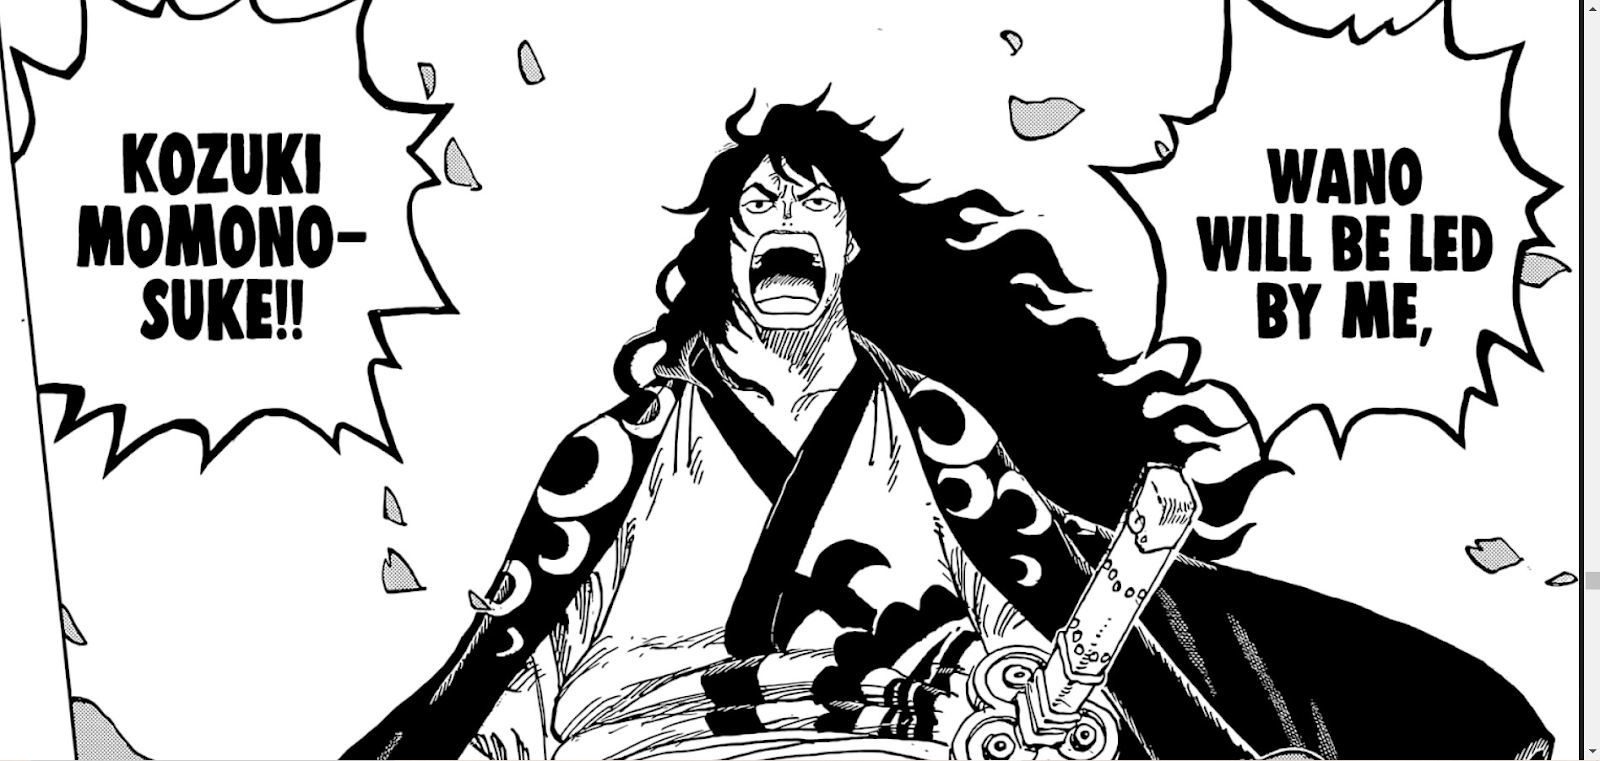 Shinobu in One Piece.